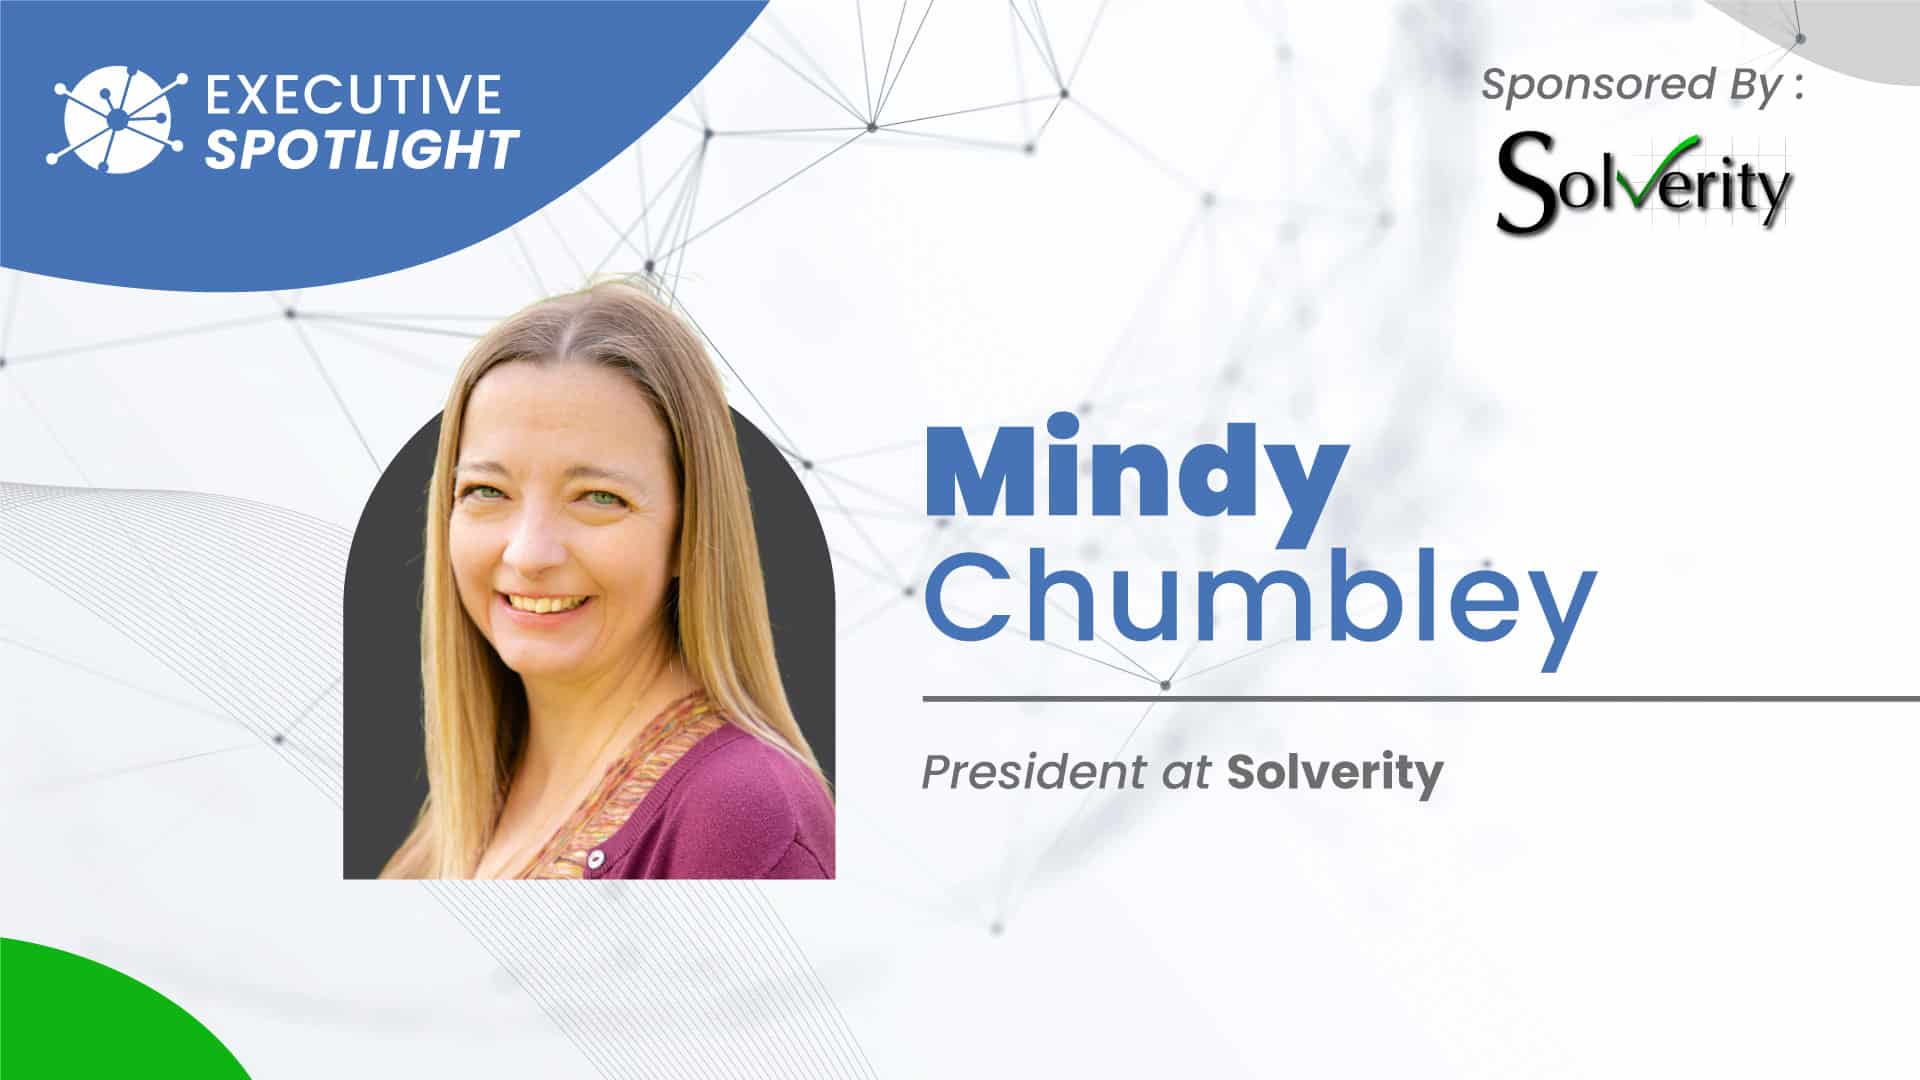 Executive Spotlight with Mindy Chumbley